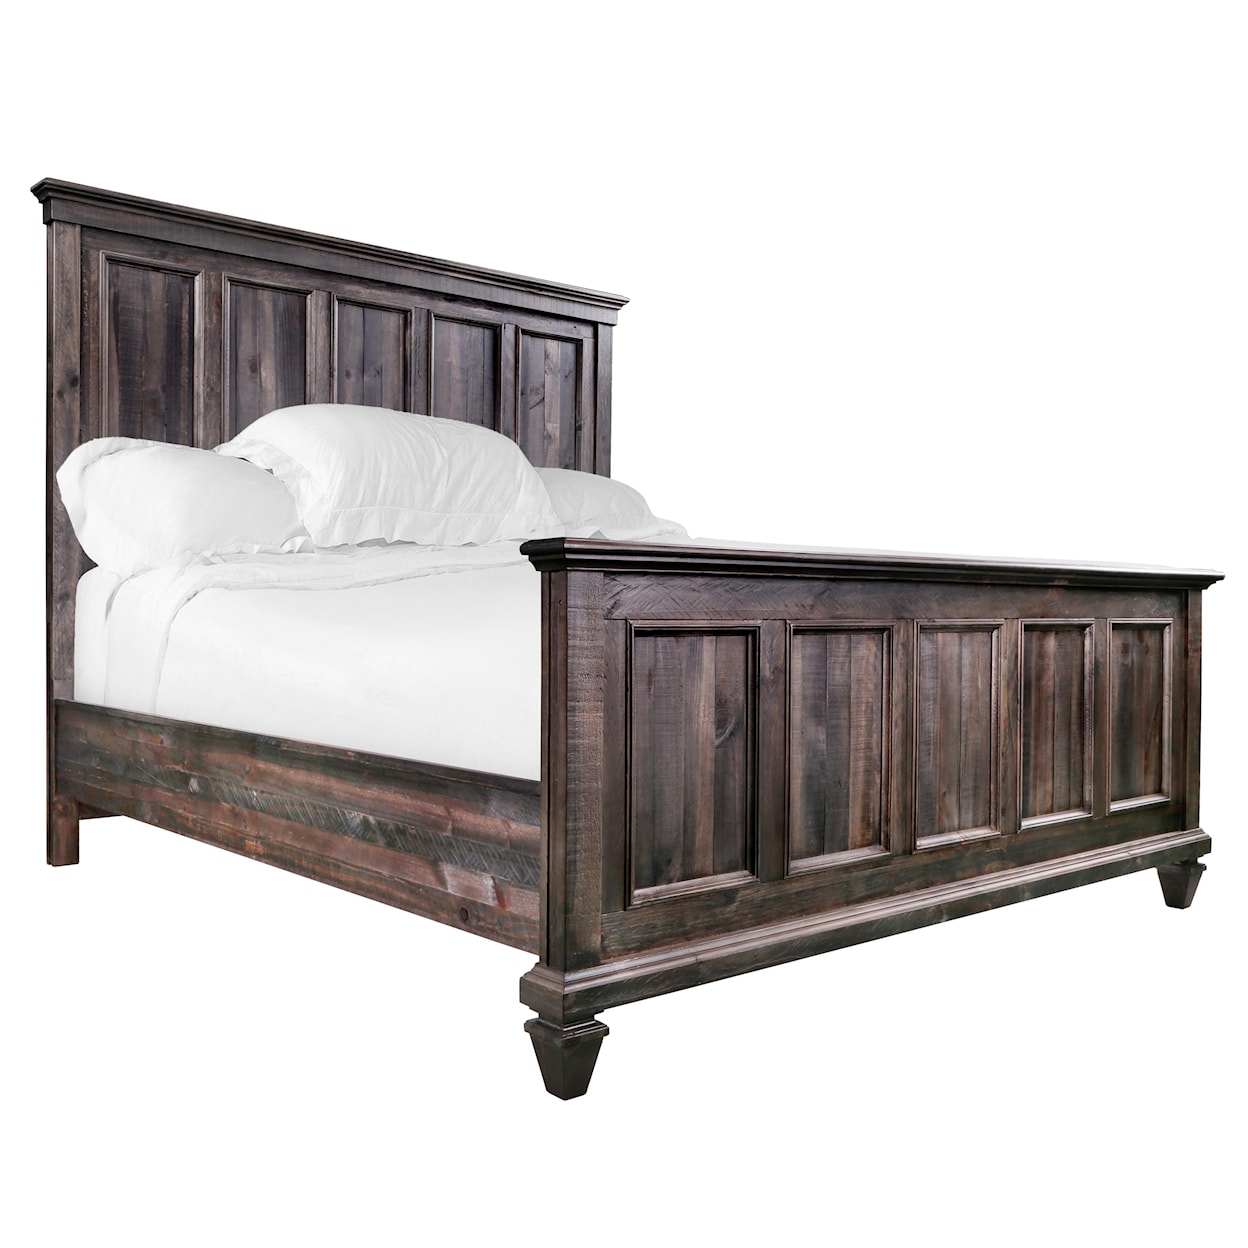 Magnussen Home Calistoga King Panel Bed